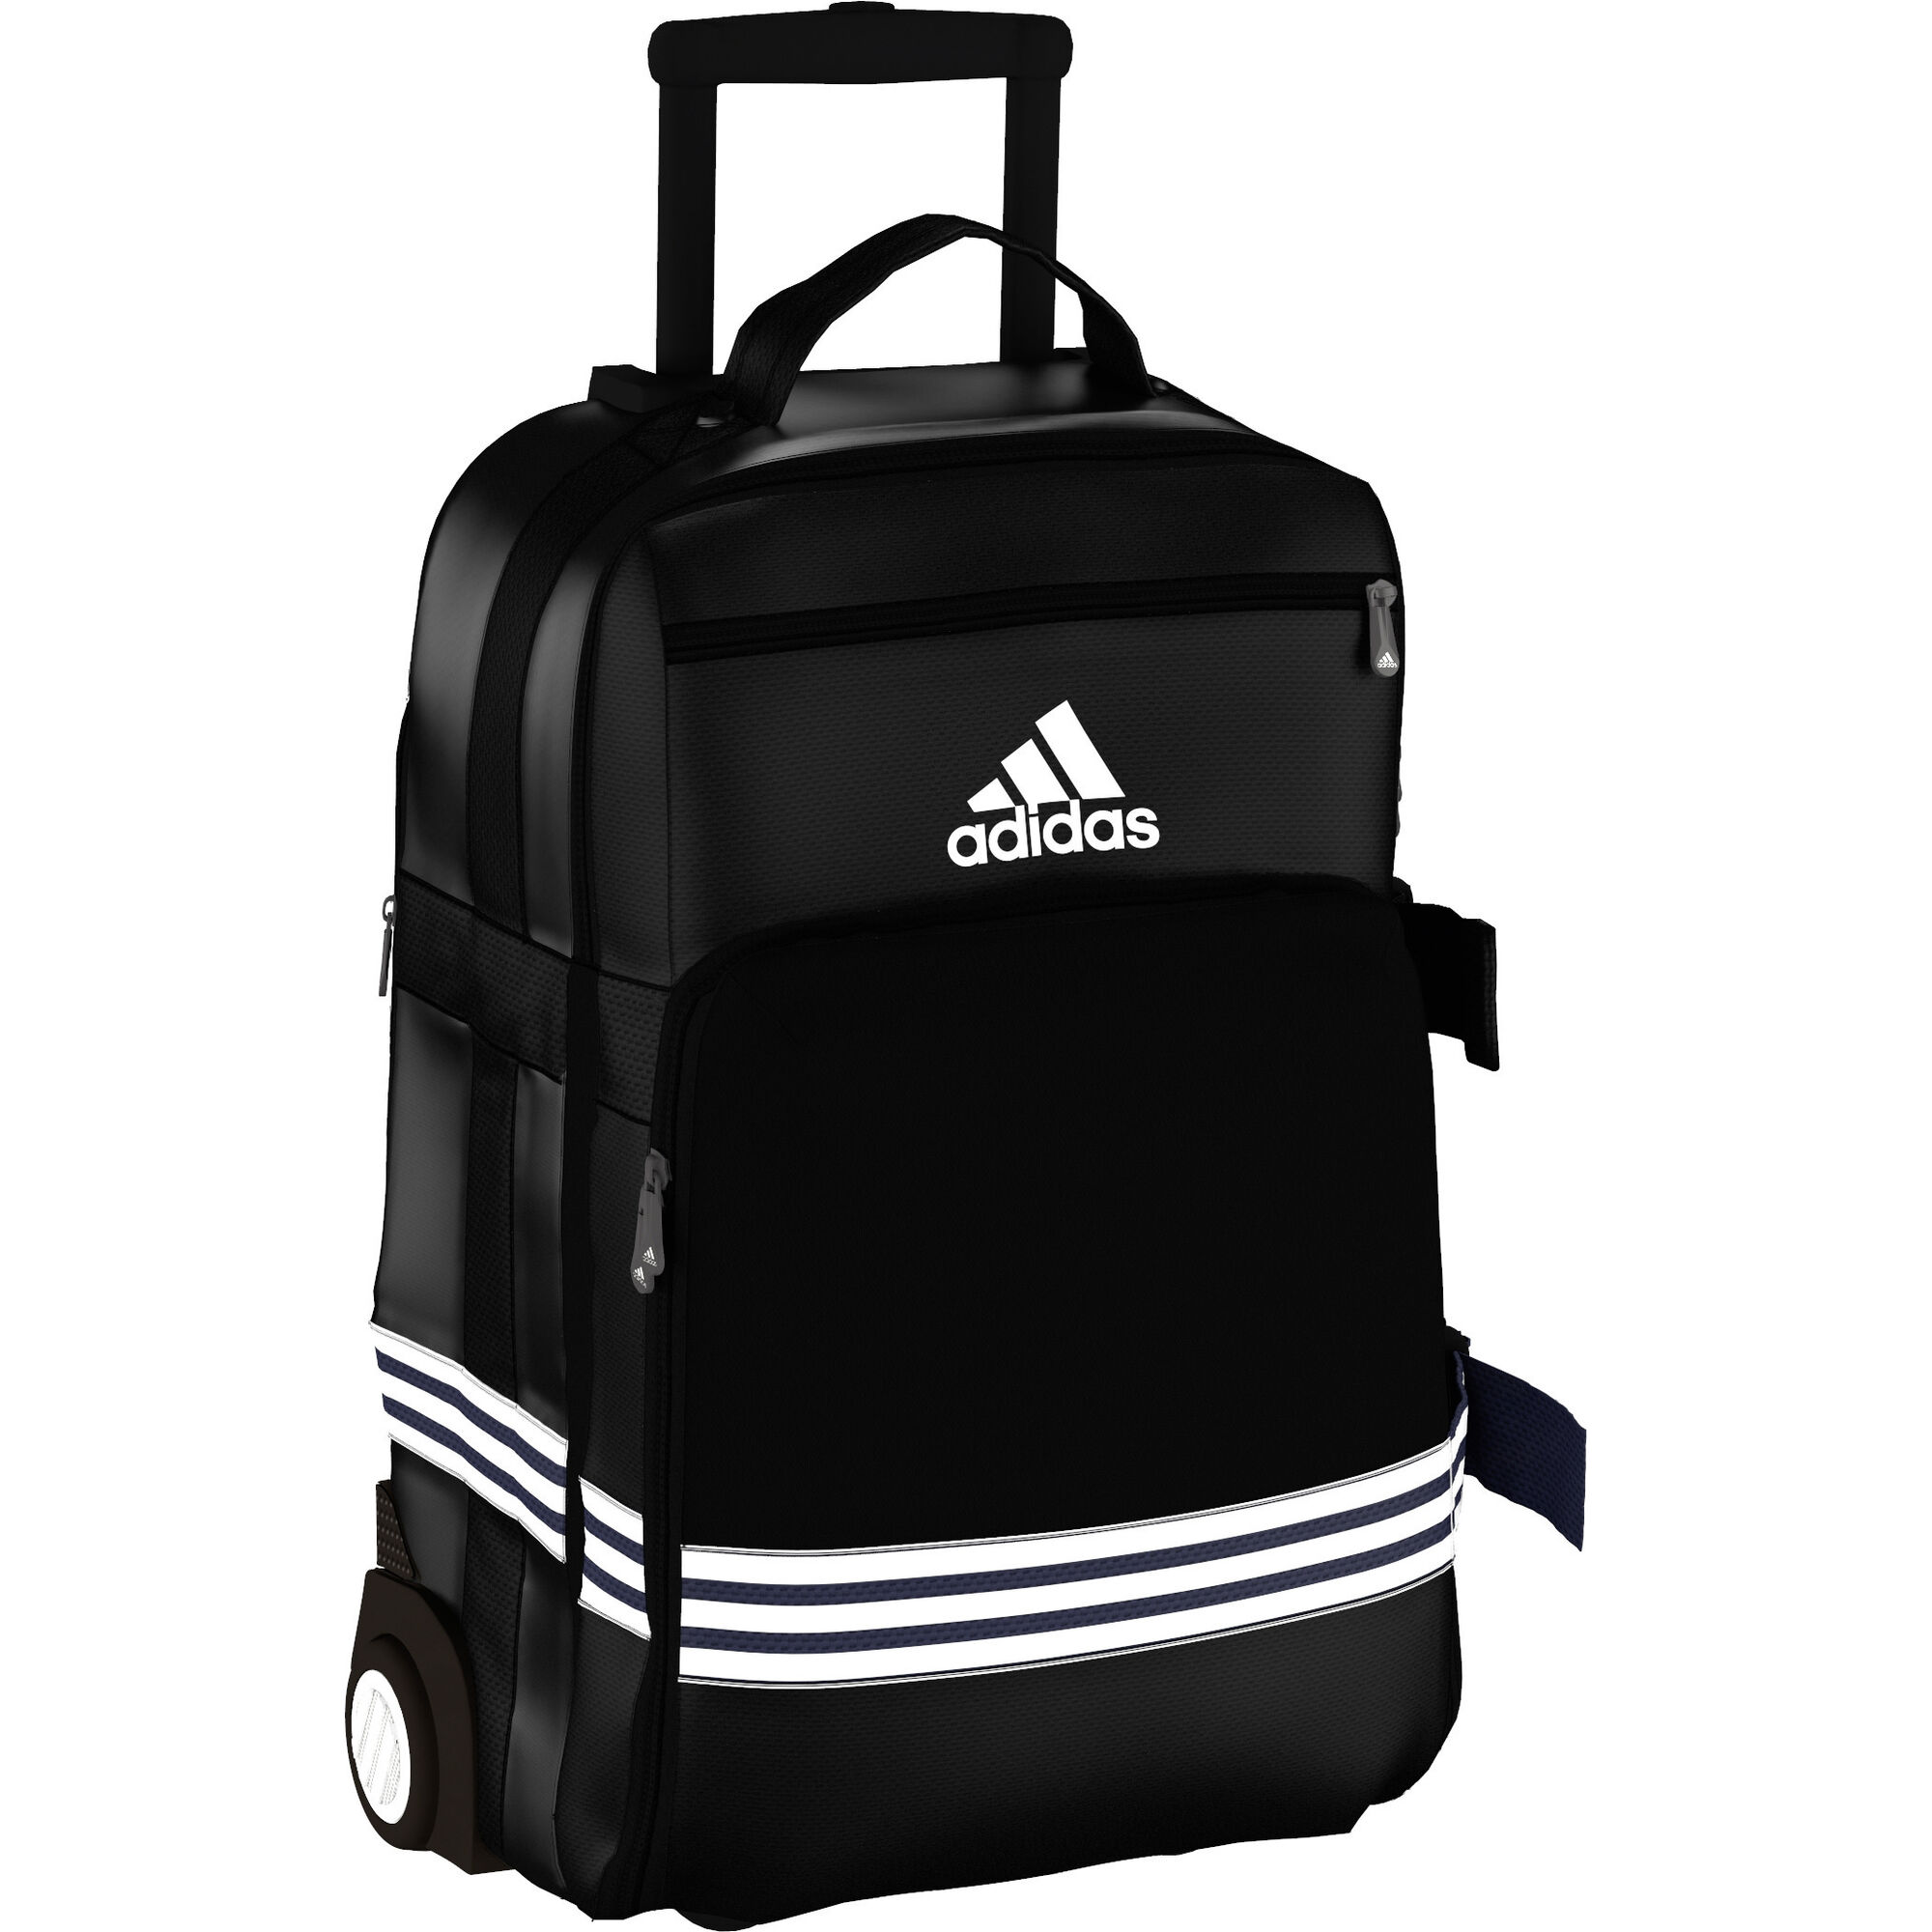 bevestig alstublieft Gom vezel buy adidas 3S Travel Trolley Cabin Size Bag - Black online | Tennis-Point